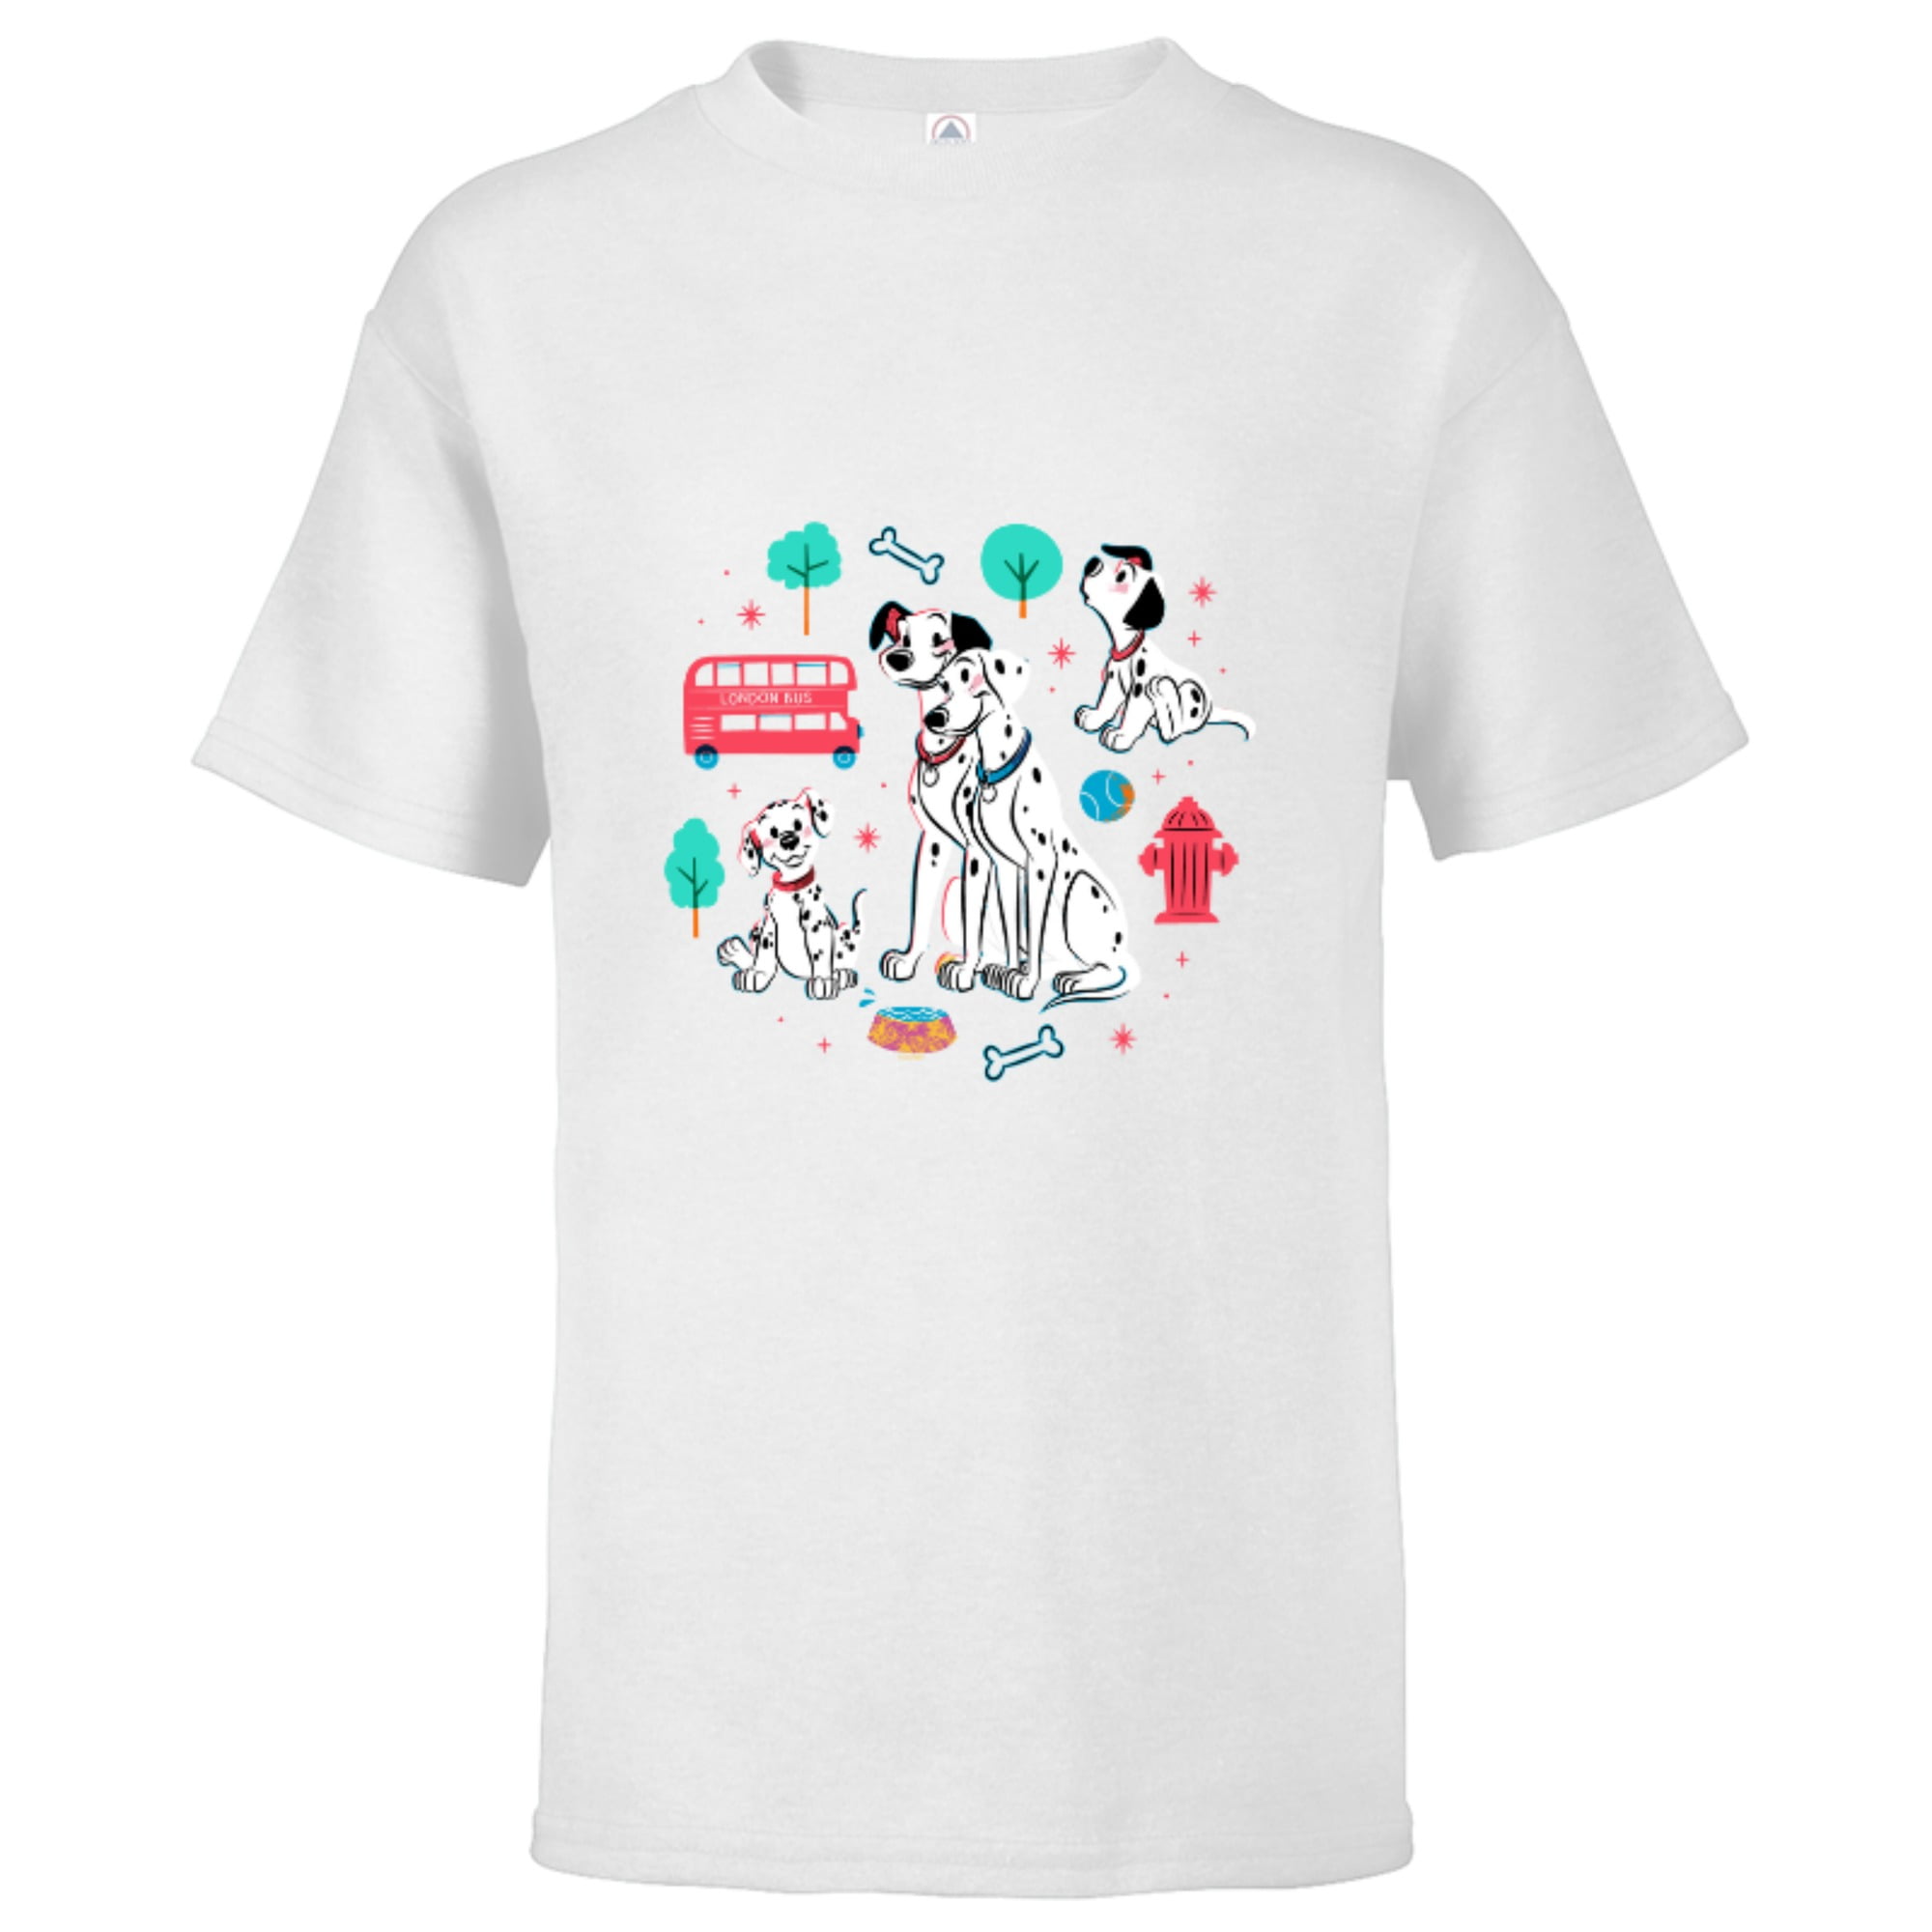 Disney Dalmatian Teacup Shirt, 101 Dalamations Shirt, Dalmatians Mickey  Balloon Shirt, the Hundred and One Dalmatians Shirt, Disney Shirt 